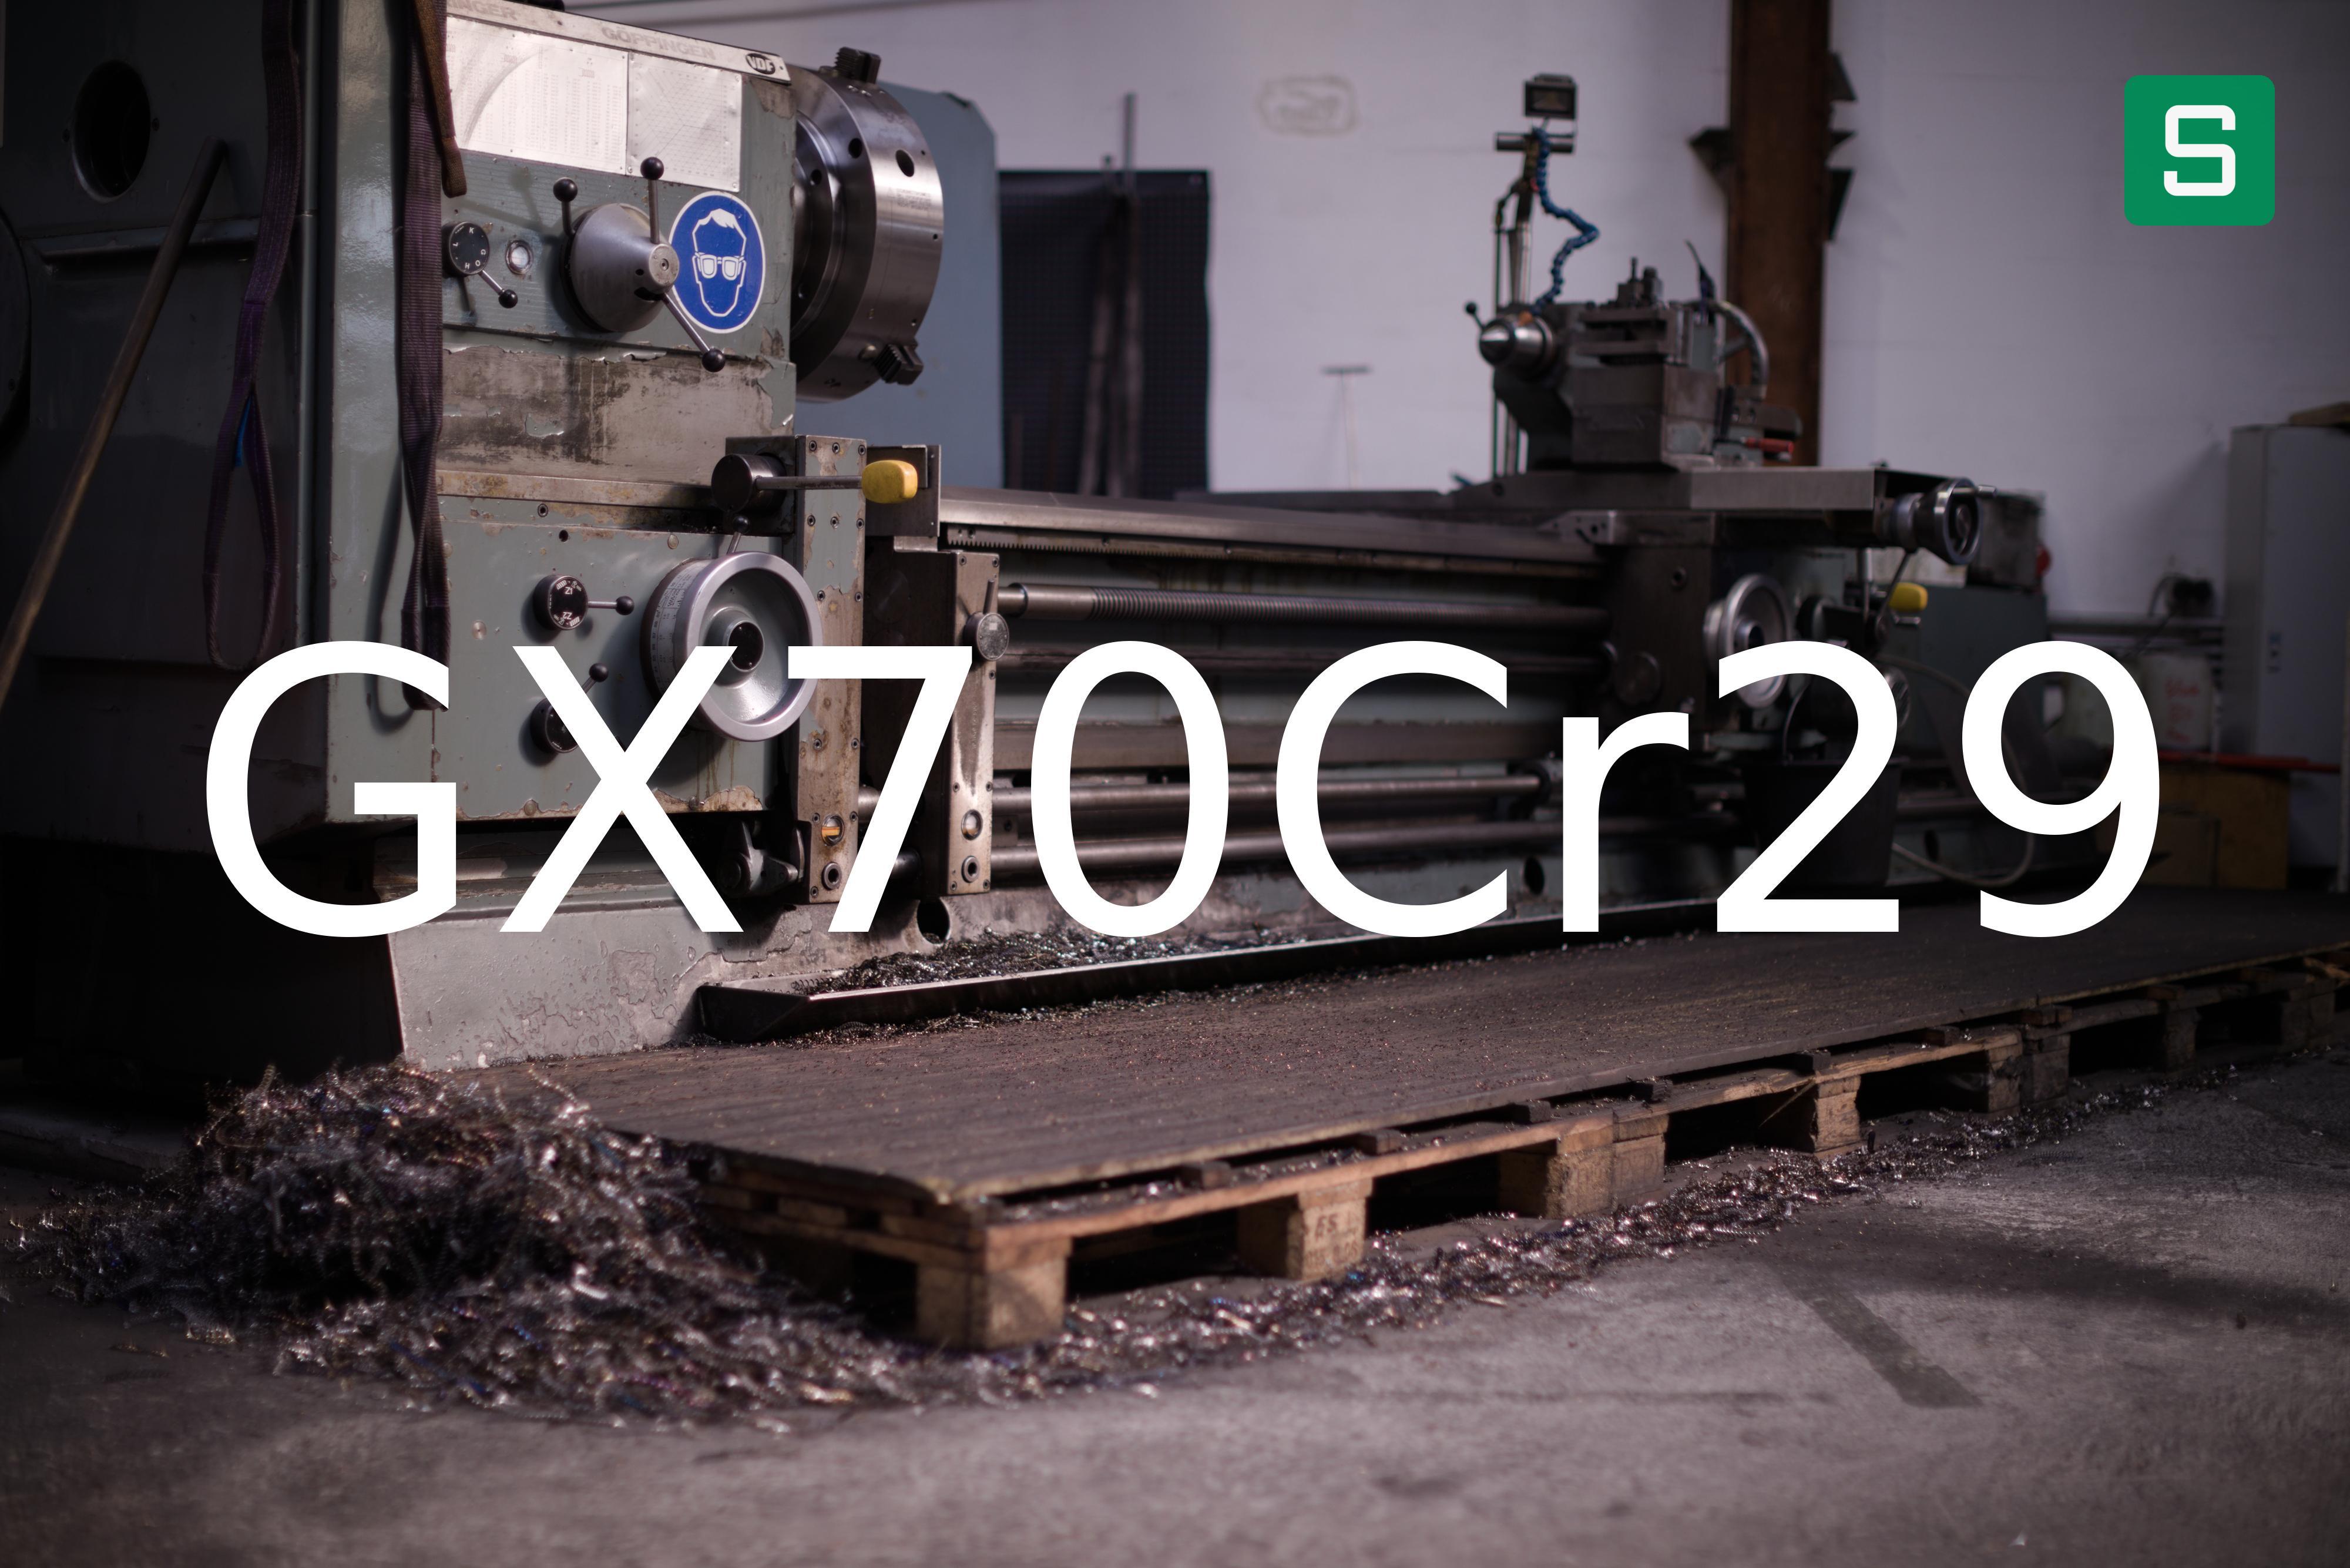 Steel Material: GX70Cr29